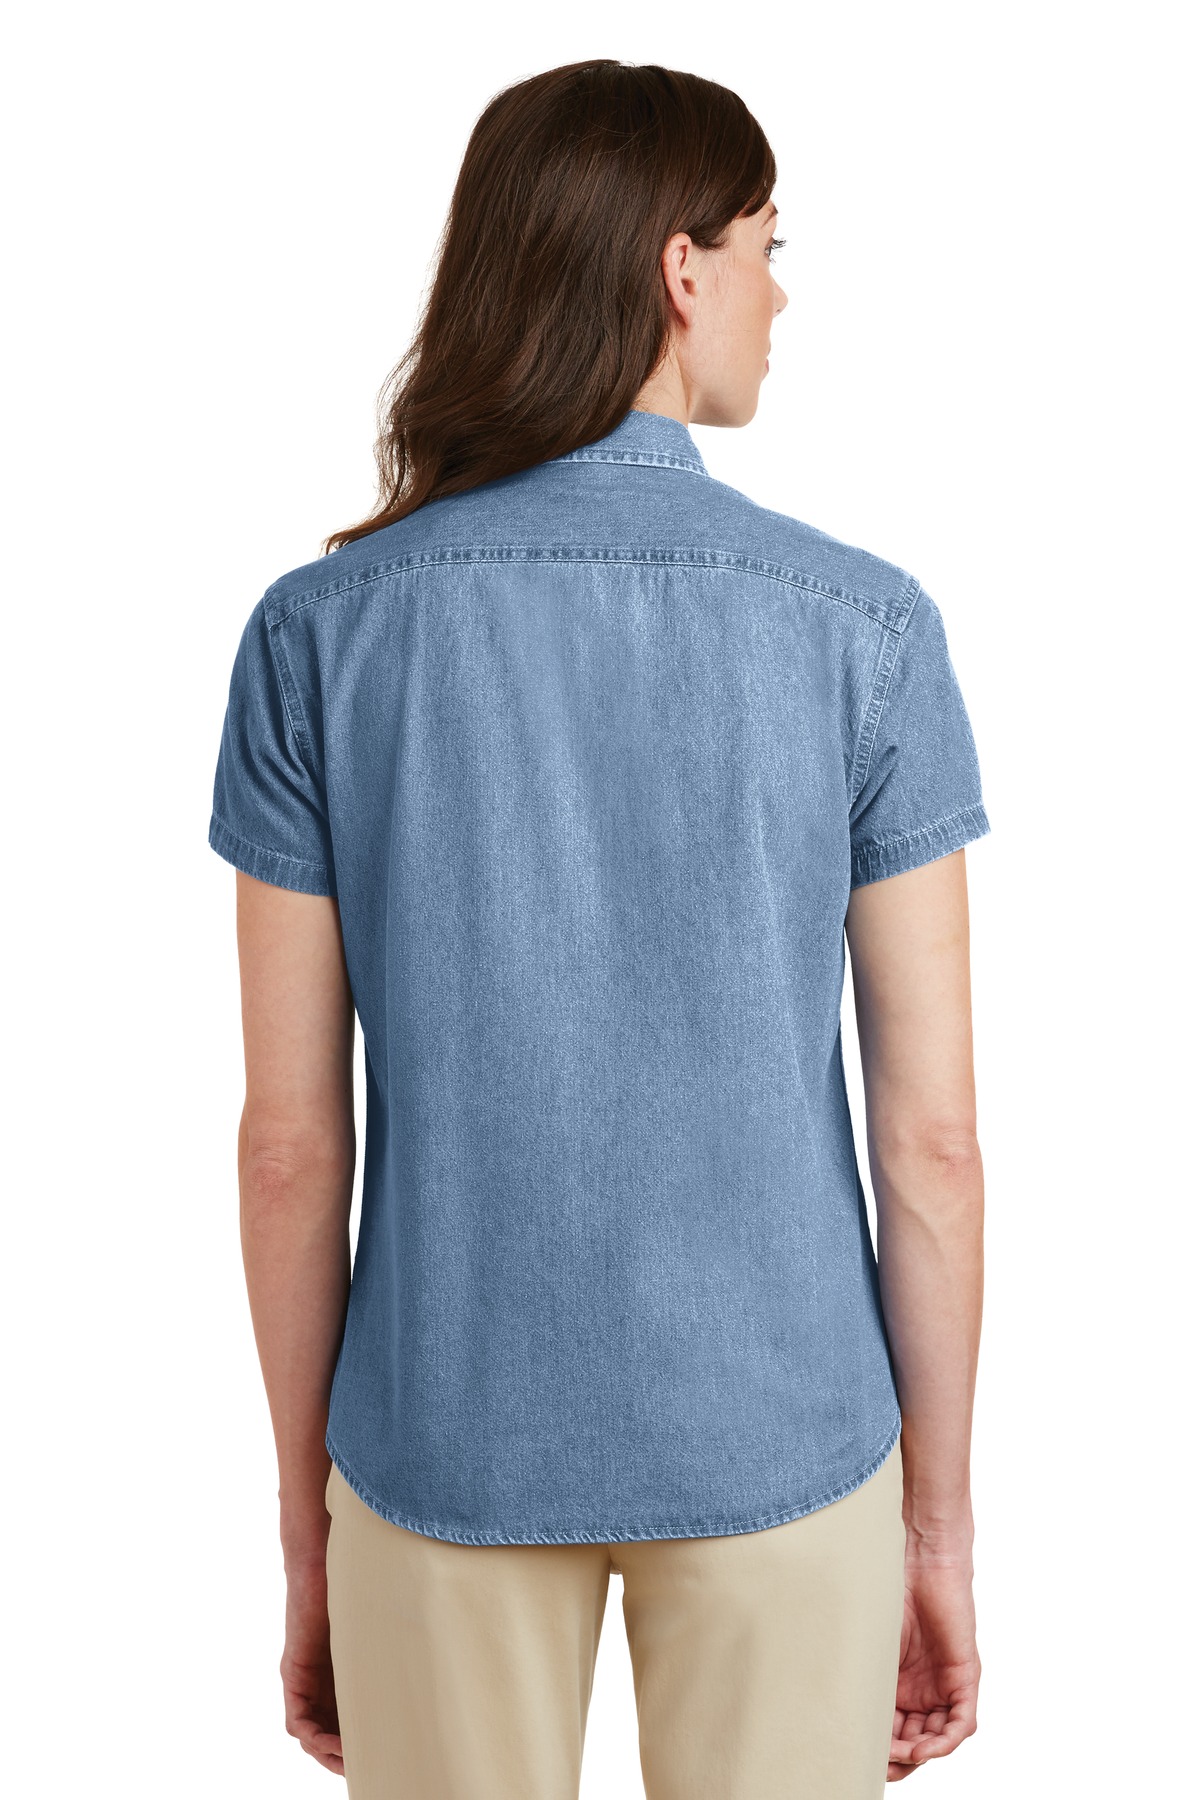 Port & Company ® - Ladies Short Sleeve Value Denim Shirt. LSP11 - image 2 of 2